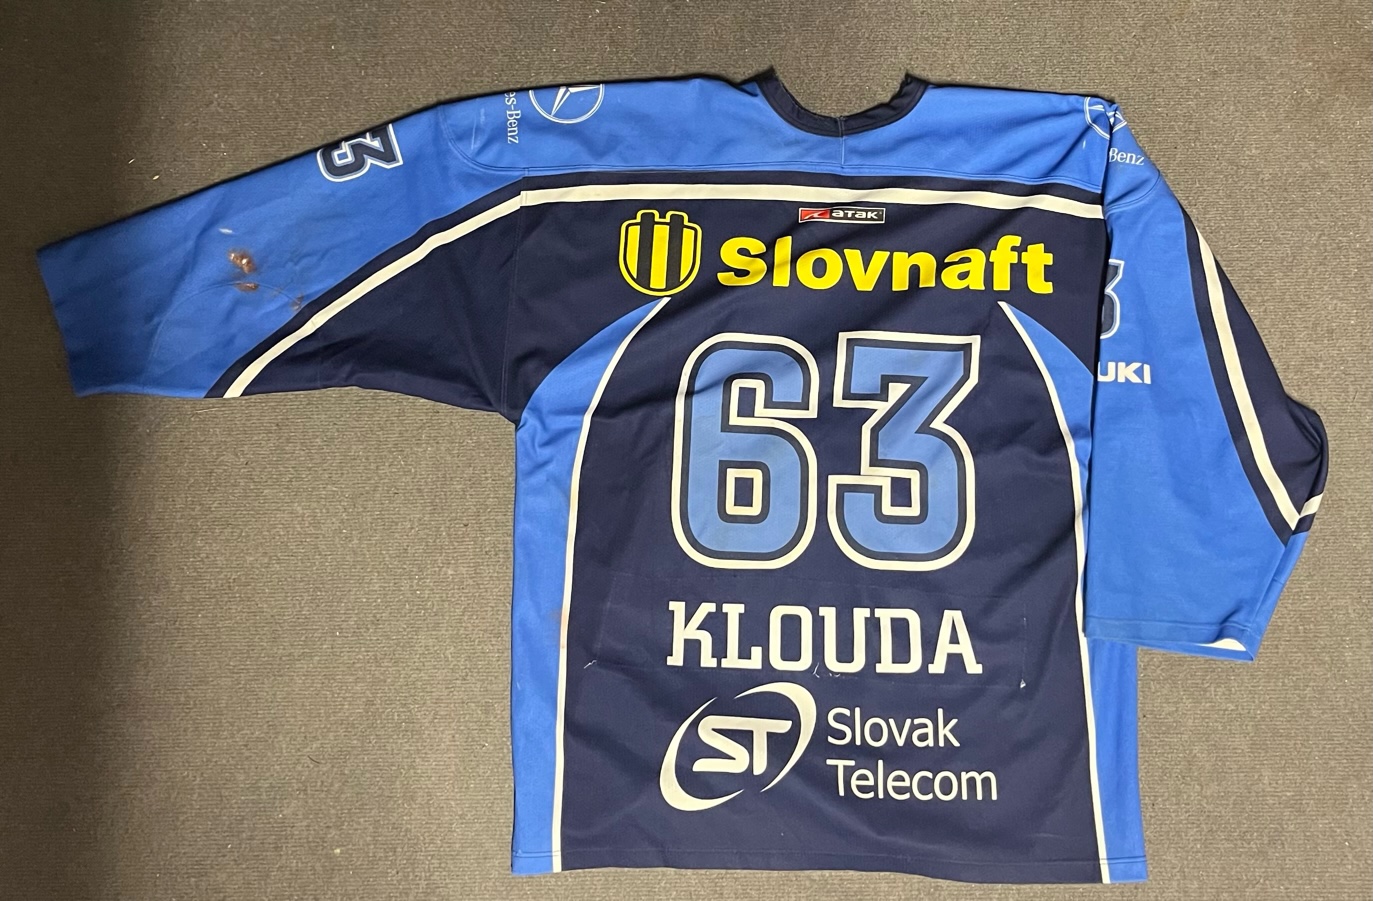 Hraný zápasový dres Kloudy ze Slovanu Bratislava photo